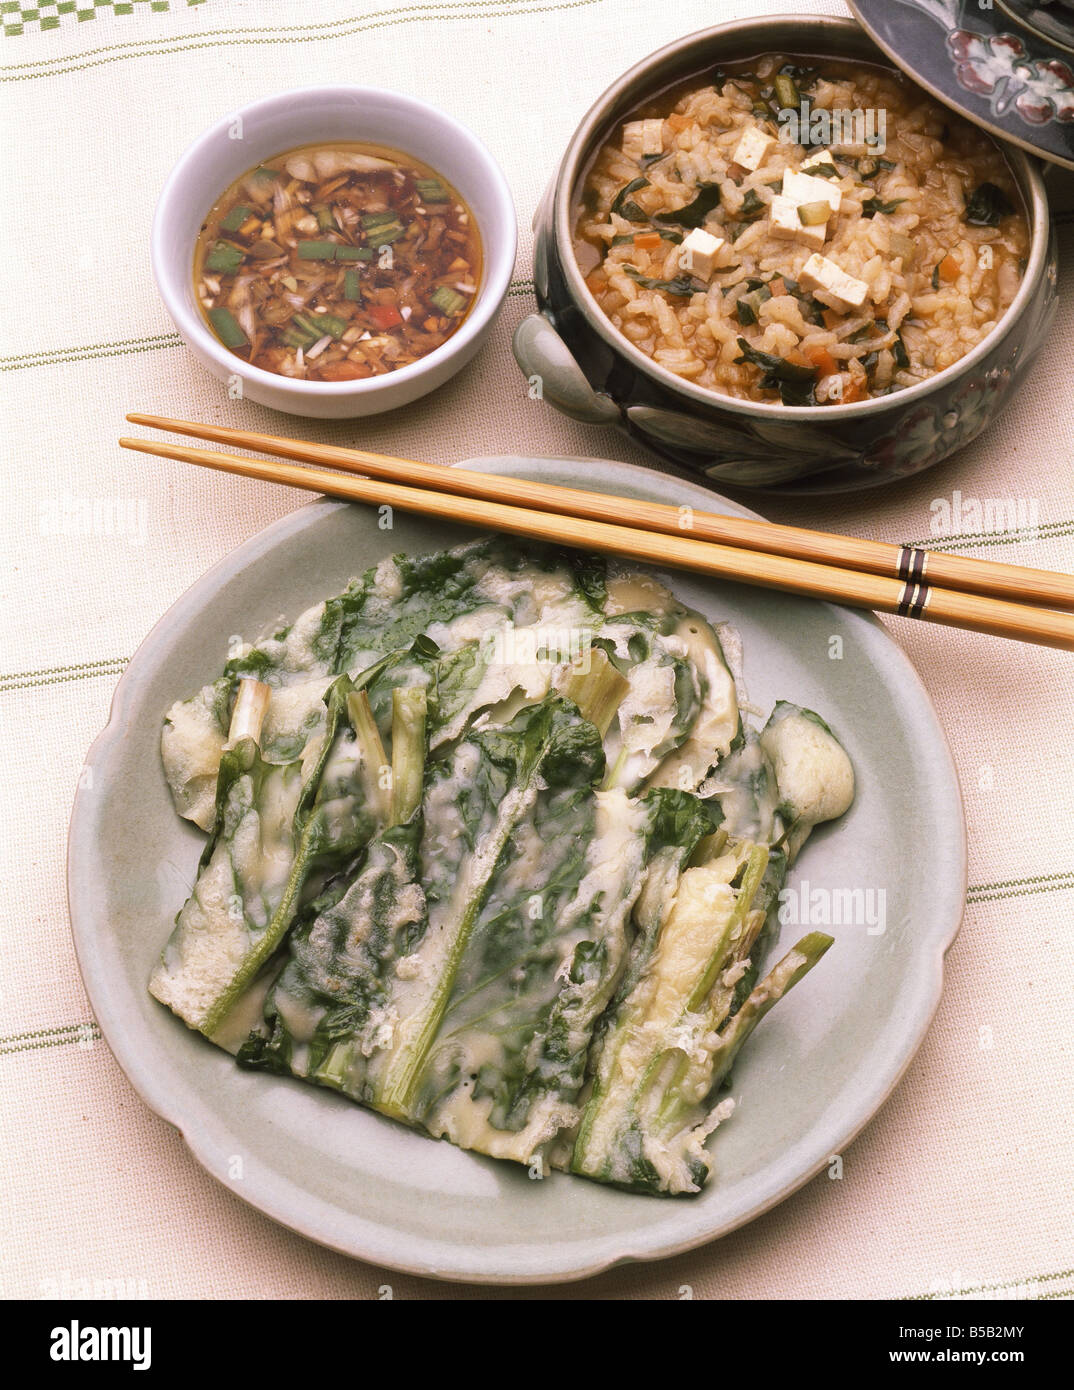 Korean Panfried Food Stock Photo